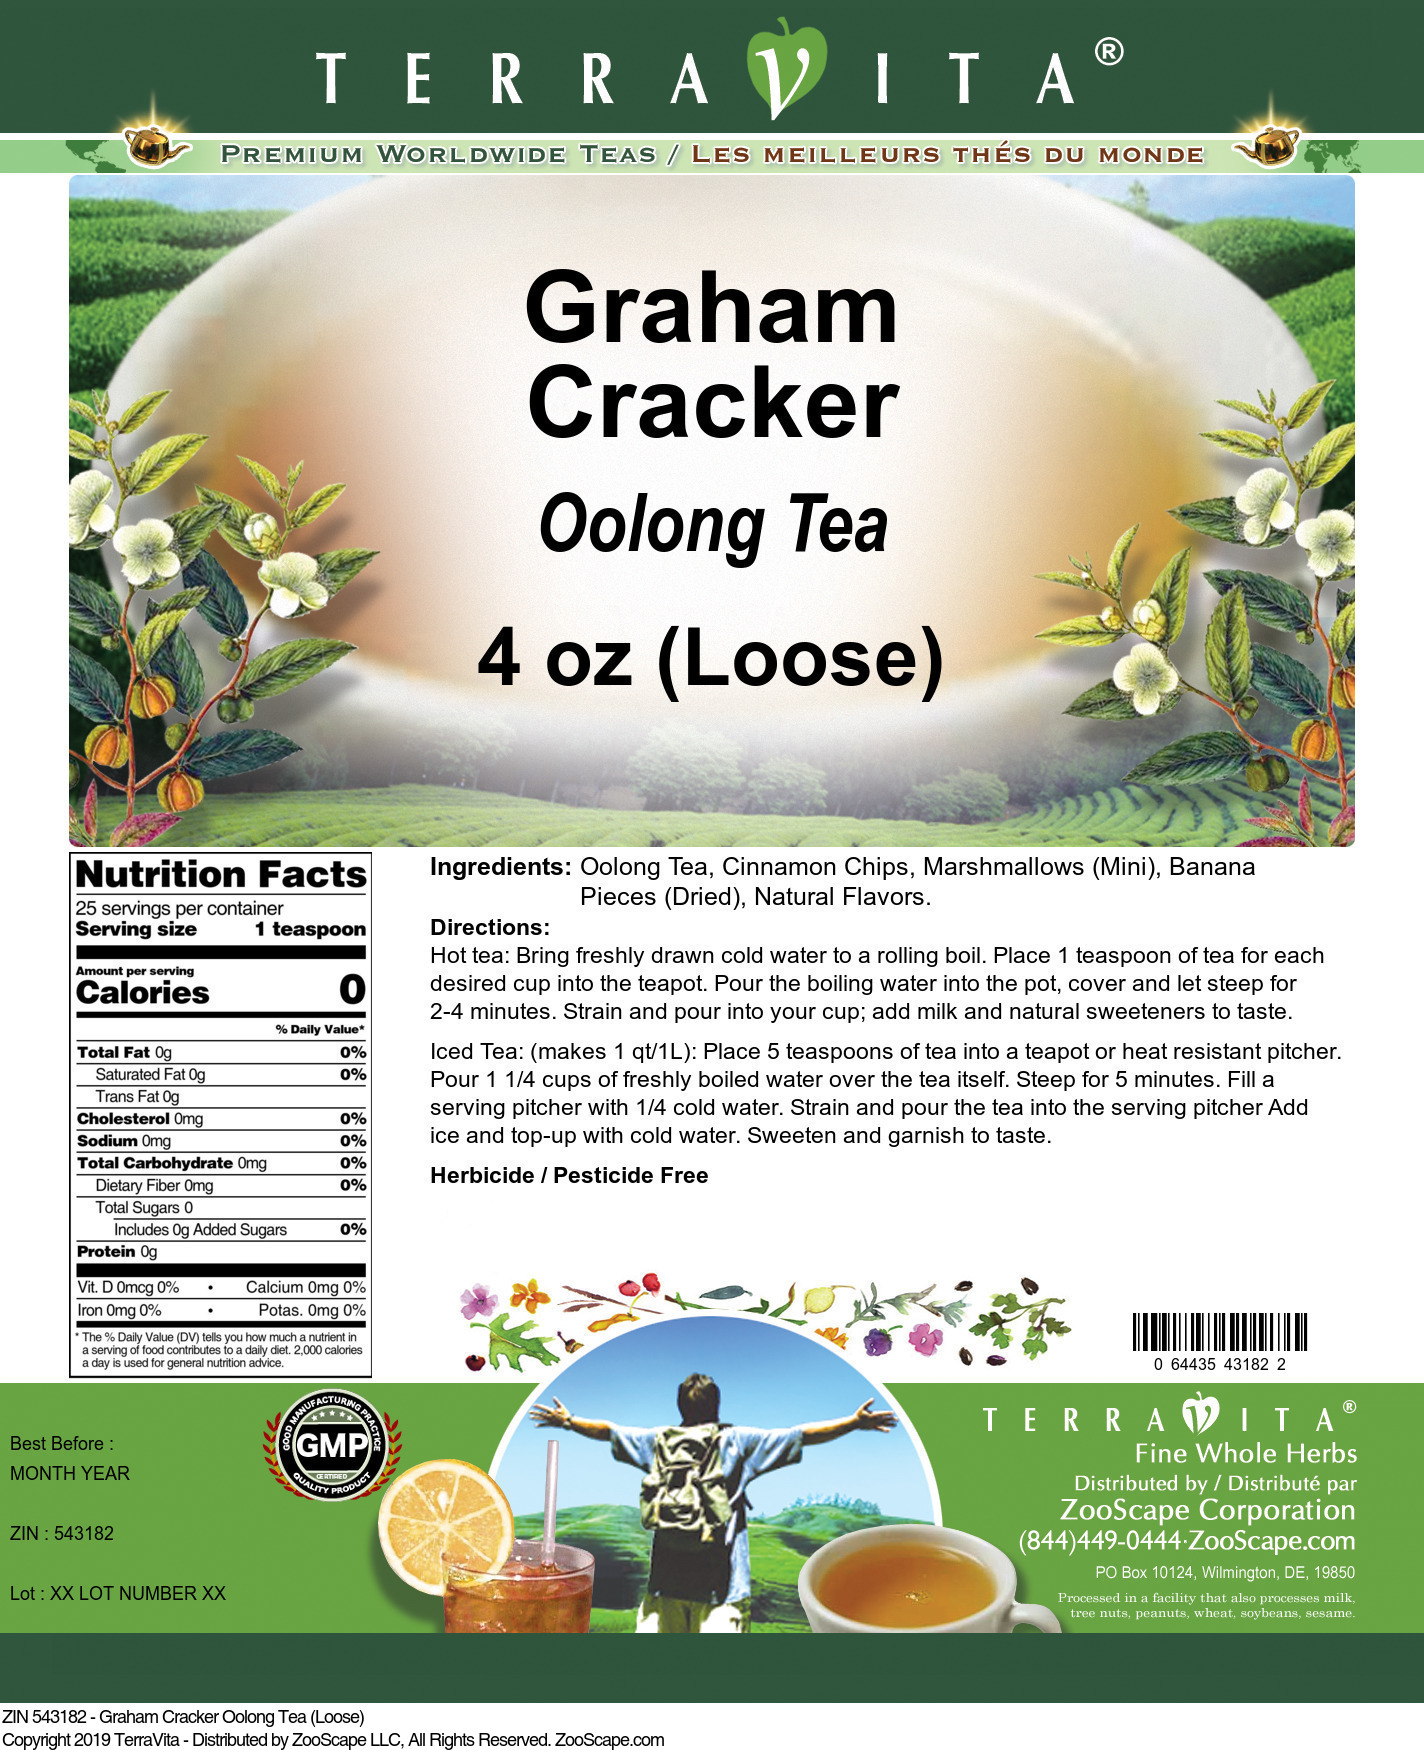 Graham Cracker Oolong Tea (Loose) - Label